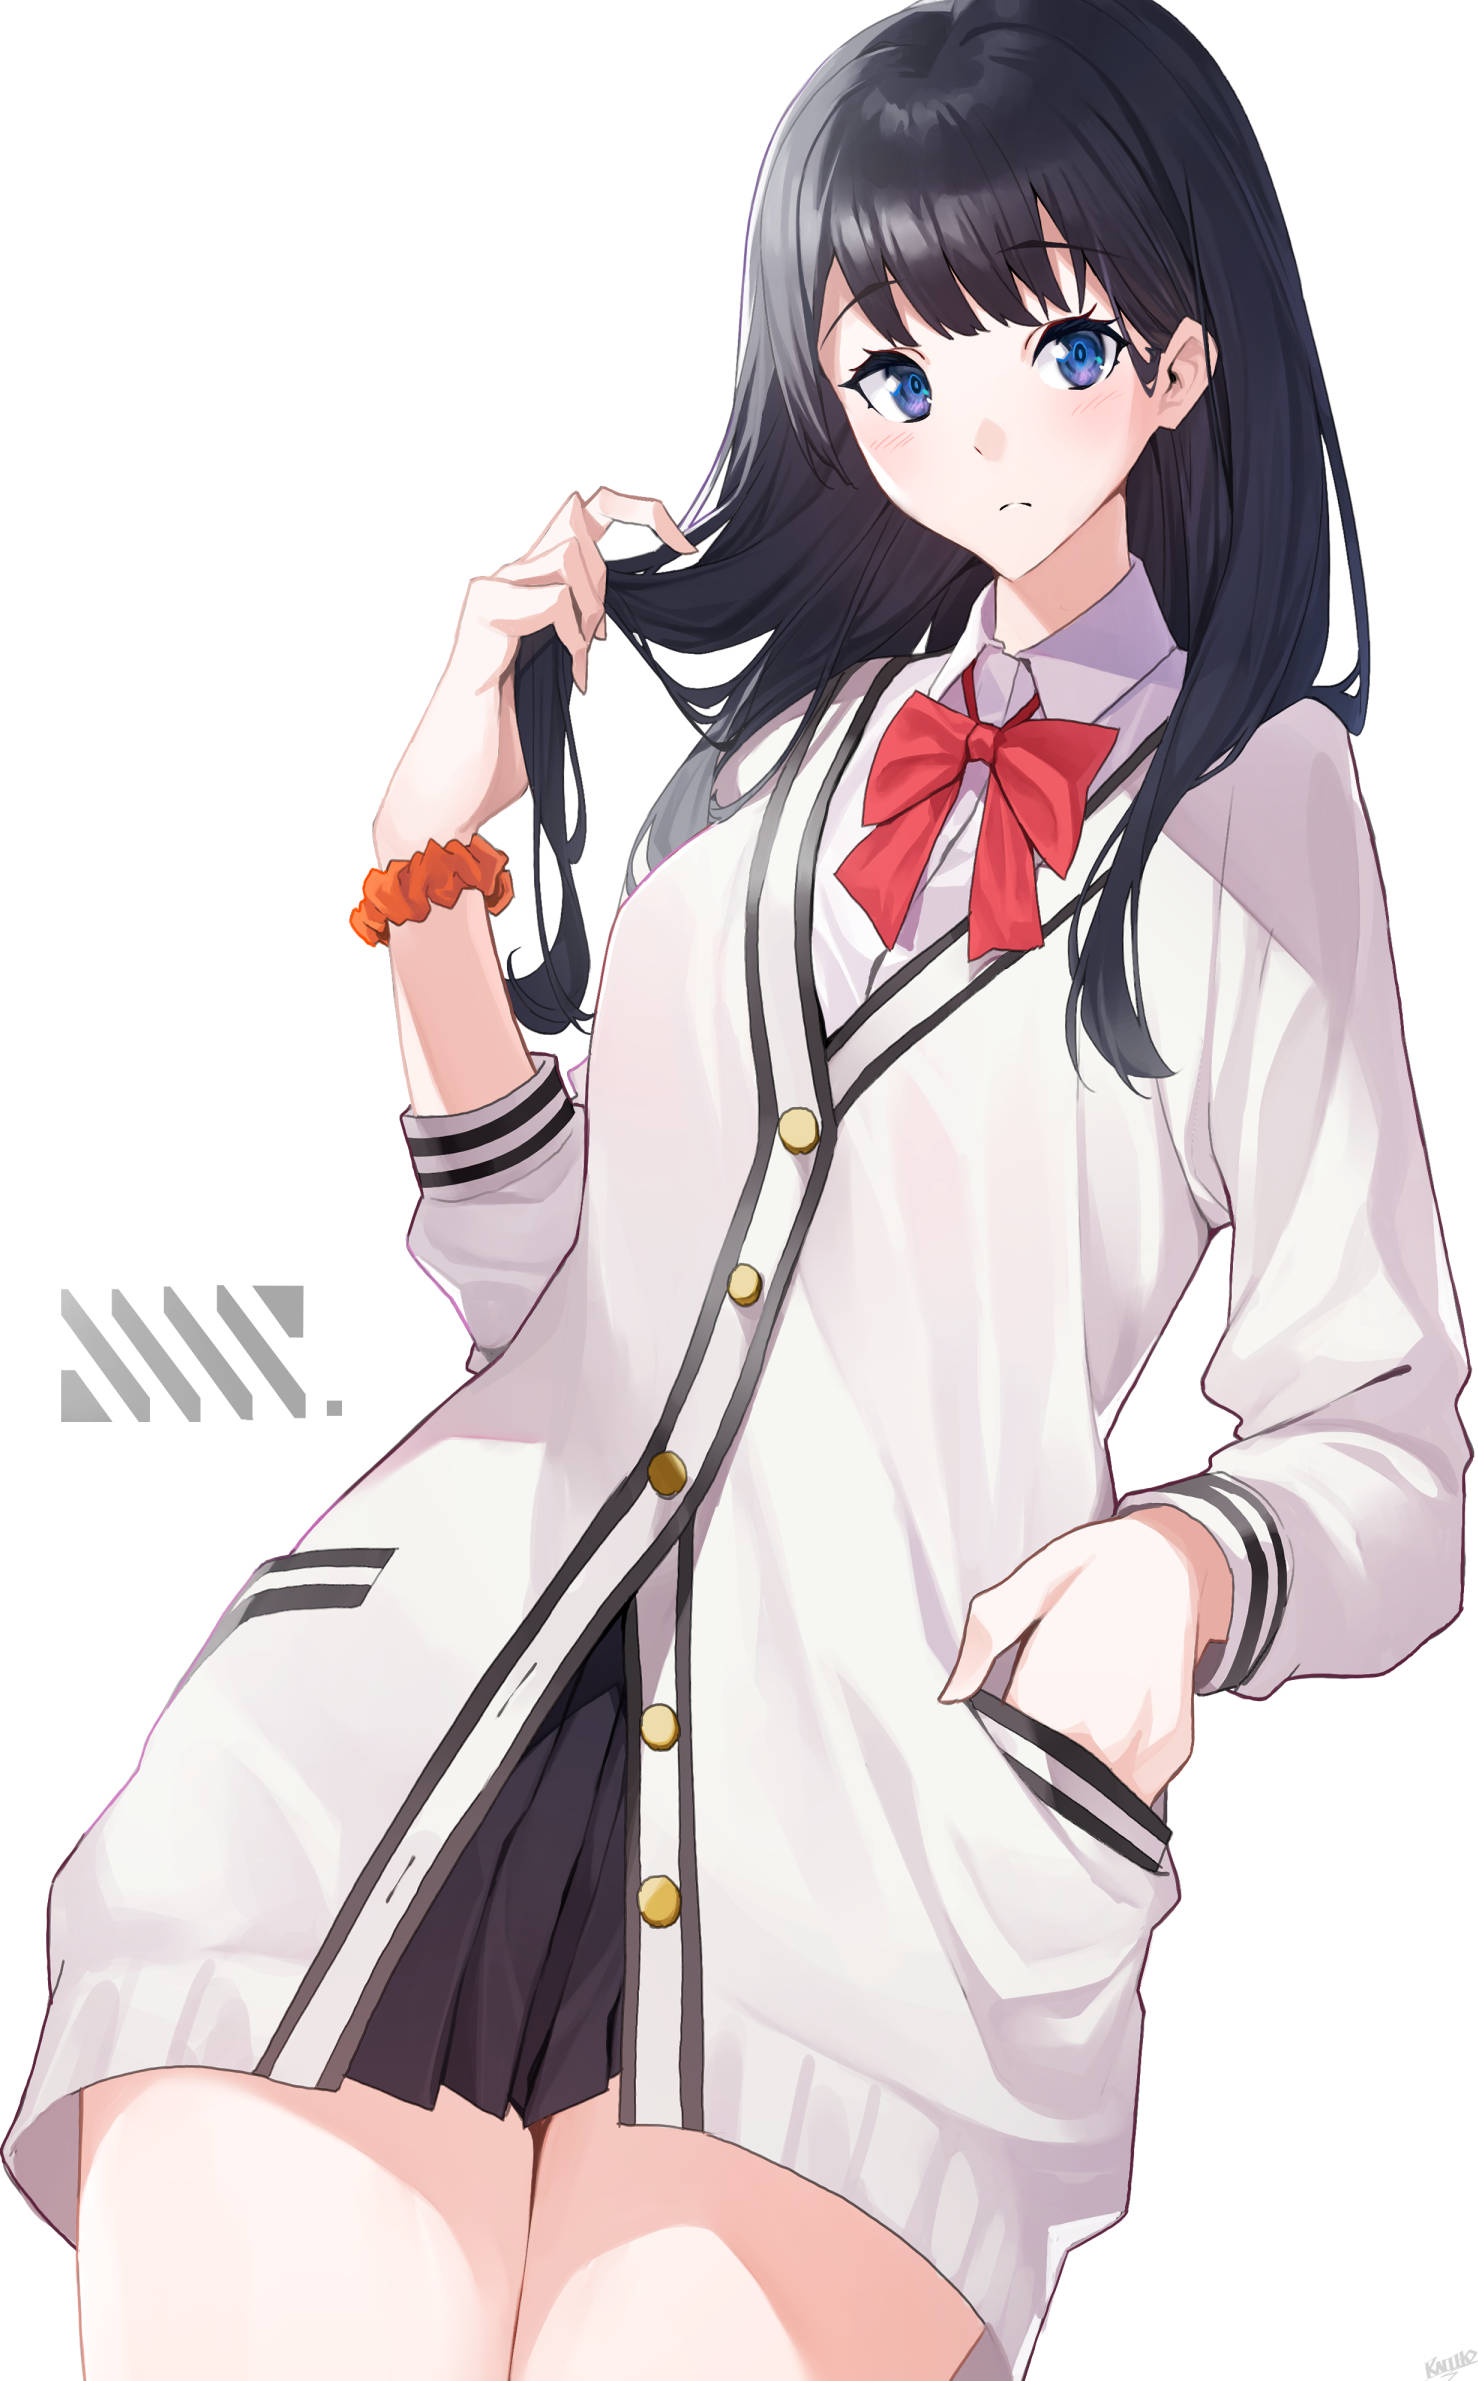 Anime 1478x2381 anime anime girls SSSS.GRIDMAN Takarada Rikka long hair dark hair school uniform artwork digital art fan art